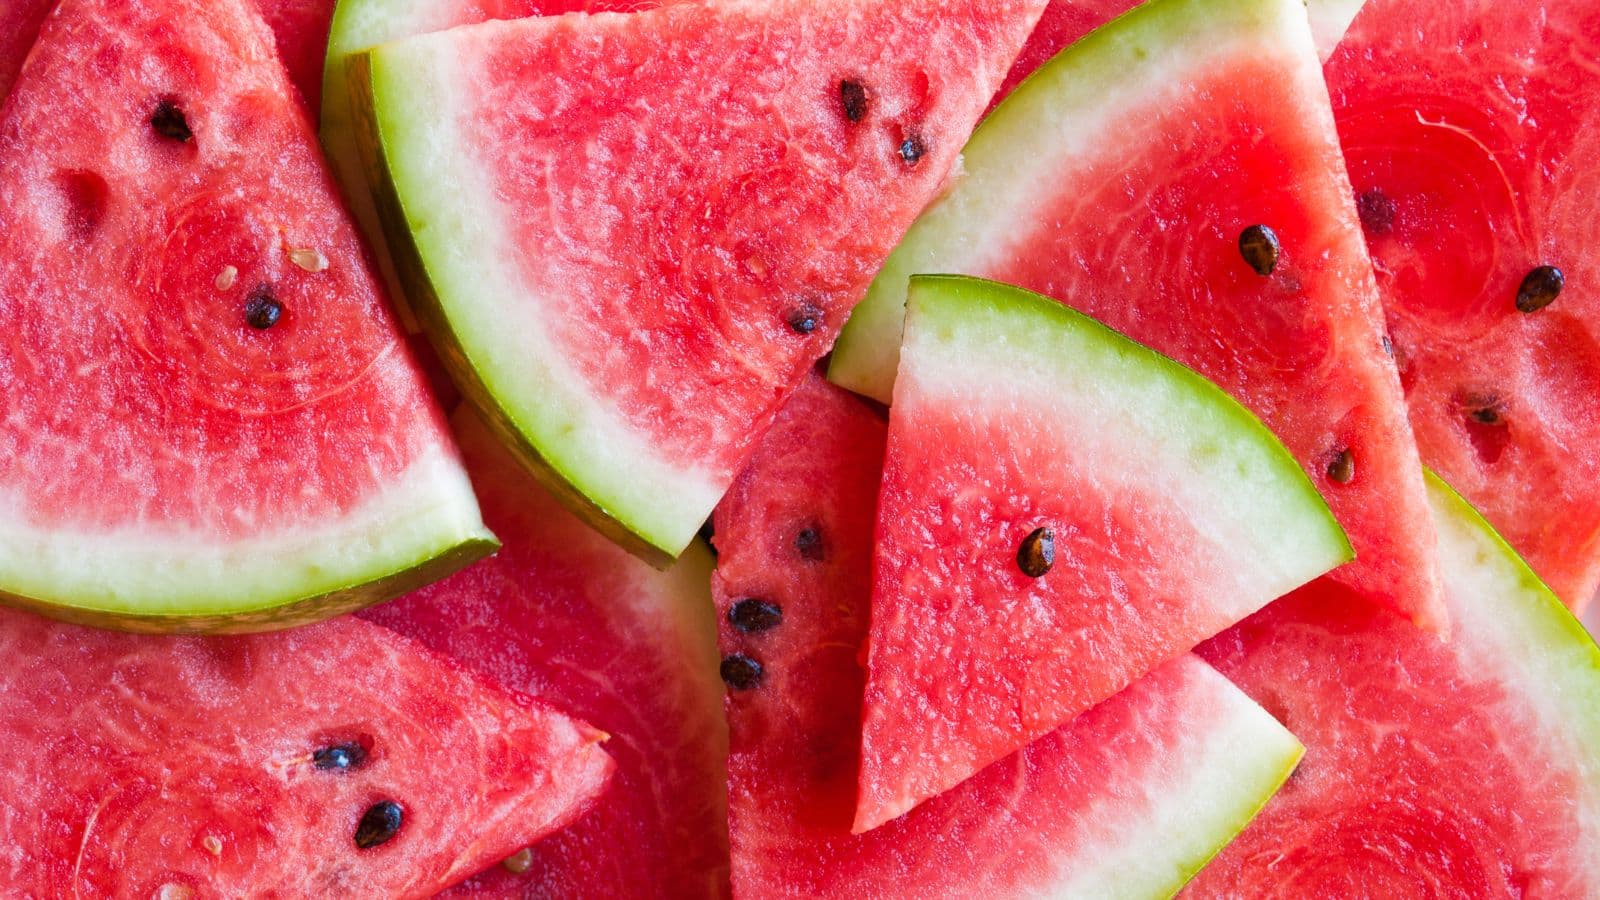 Watermelon slices.
